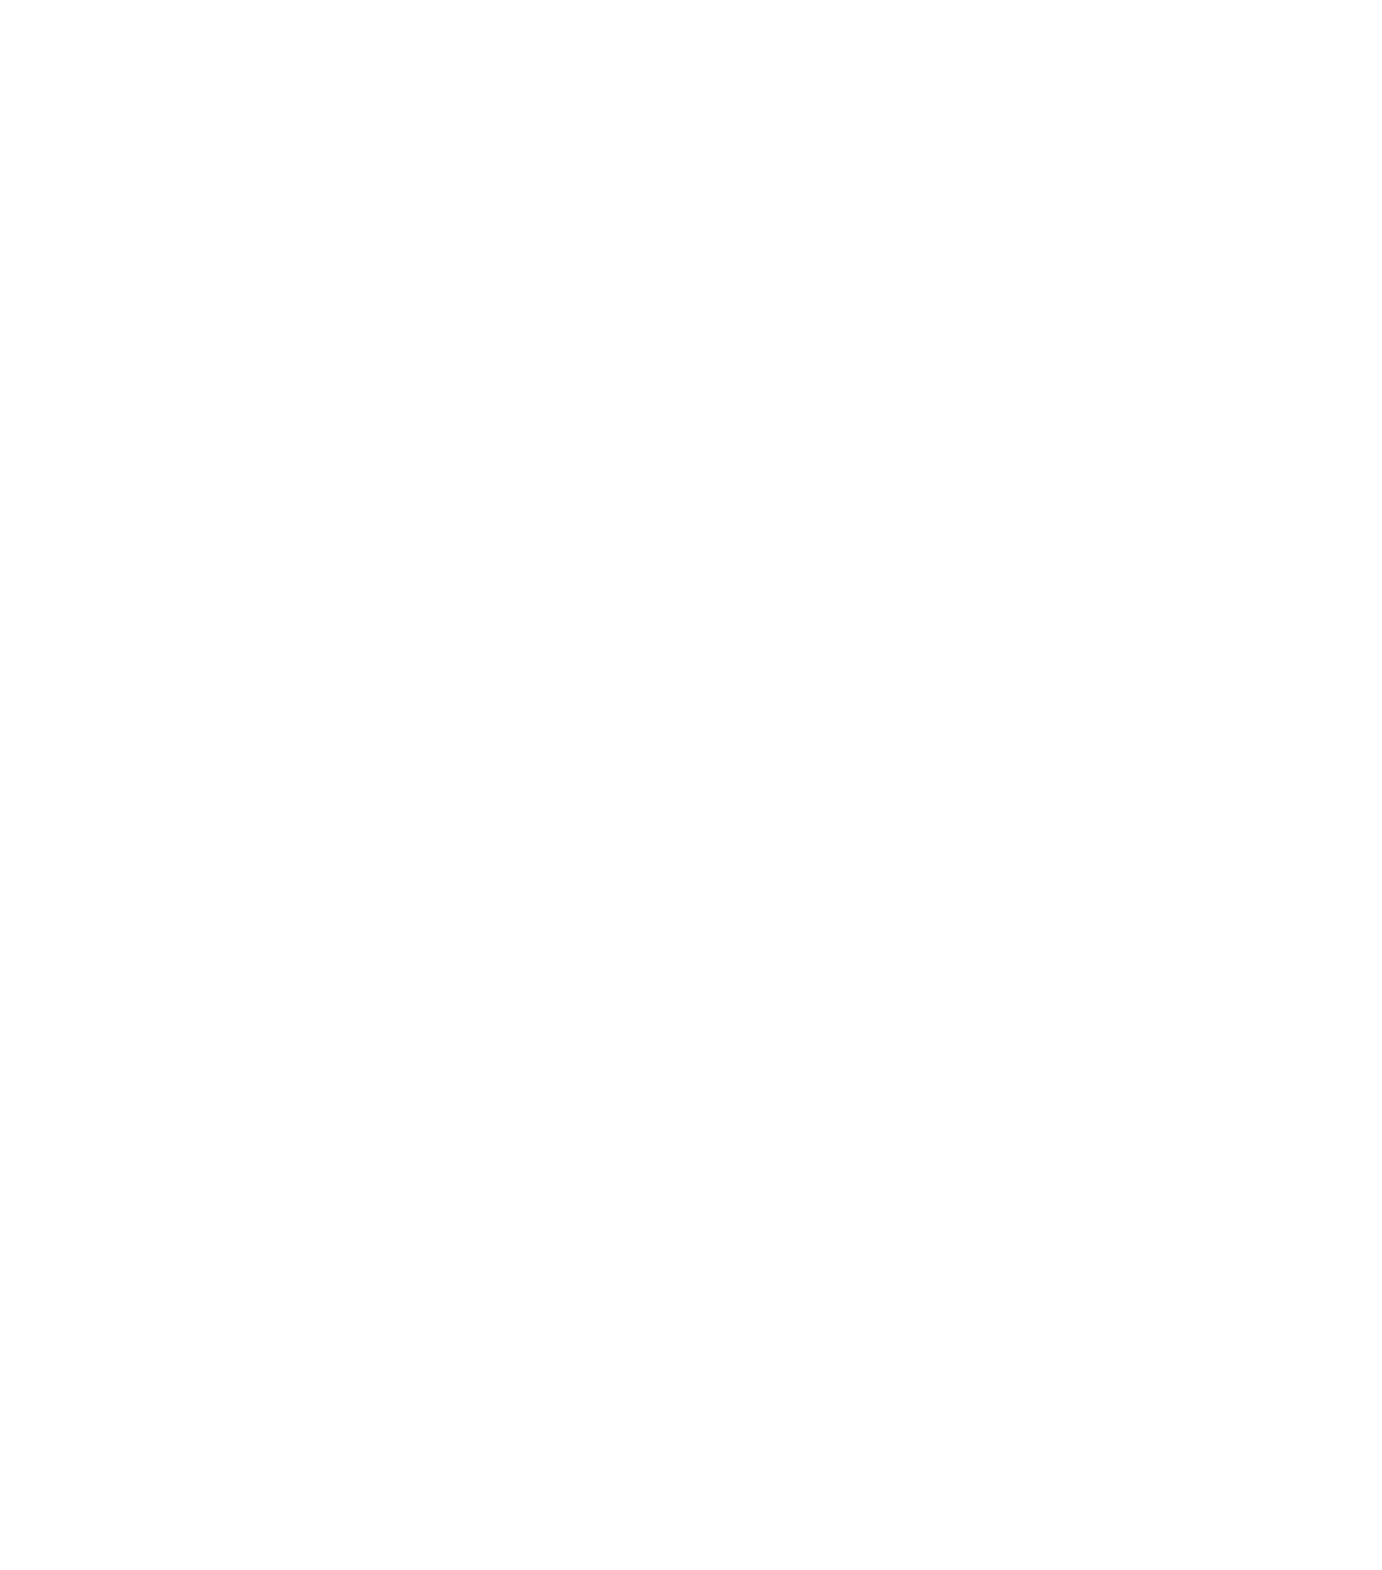 Diploma plc logo for dark backgrounds (transparent PNG)